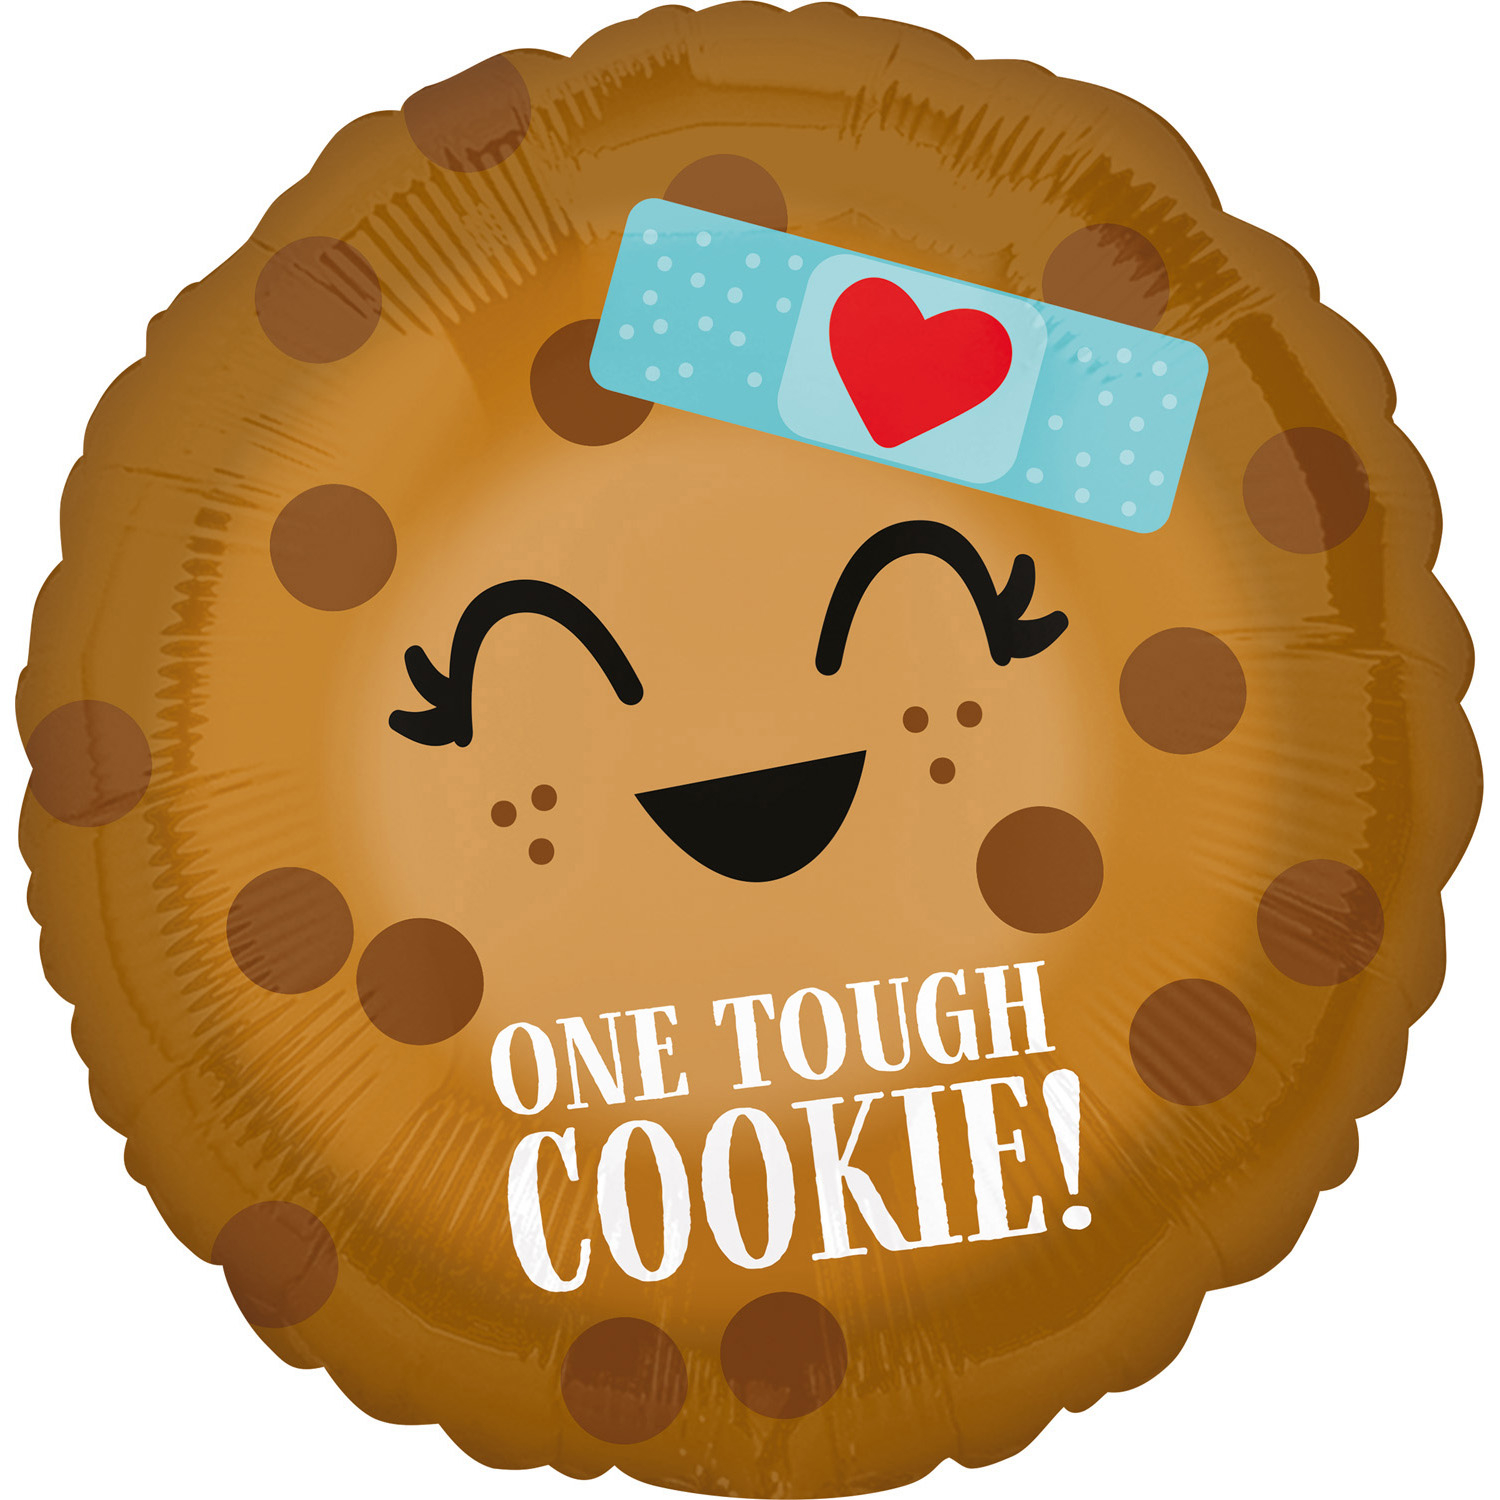 Tough cookie. Печенька улыбается. Cookie ава. Печенье улыбайся. Печенье улыбается.